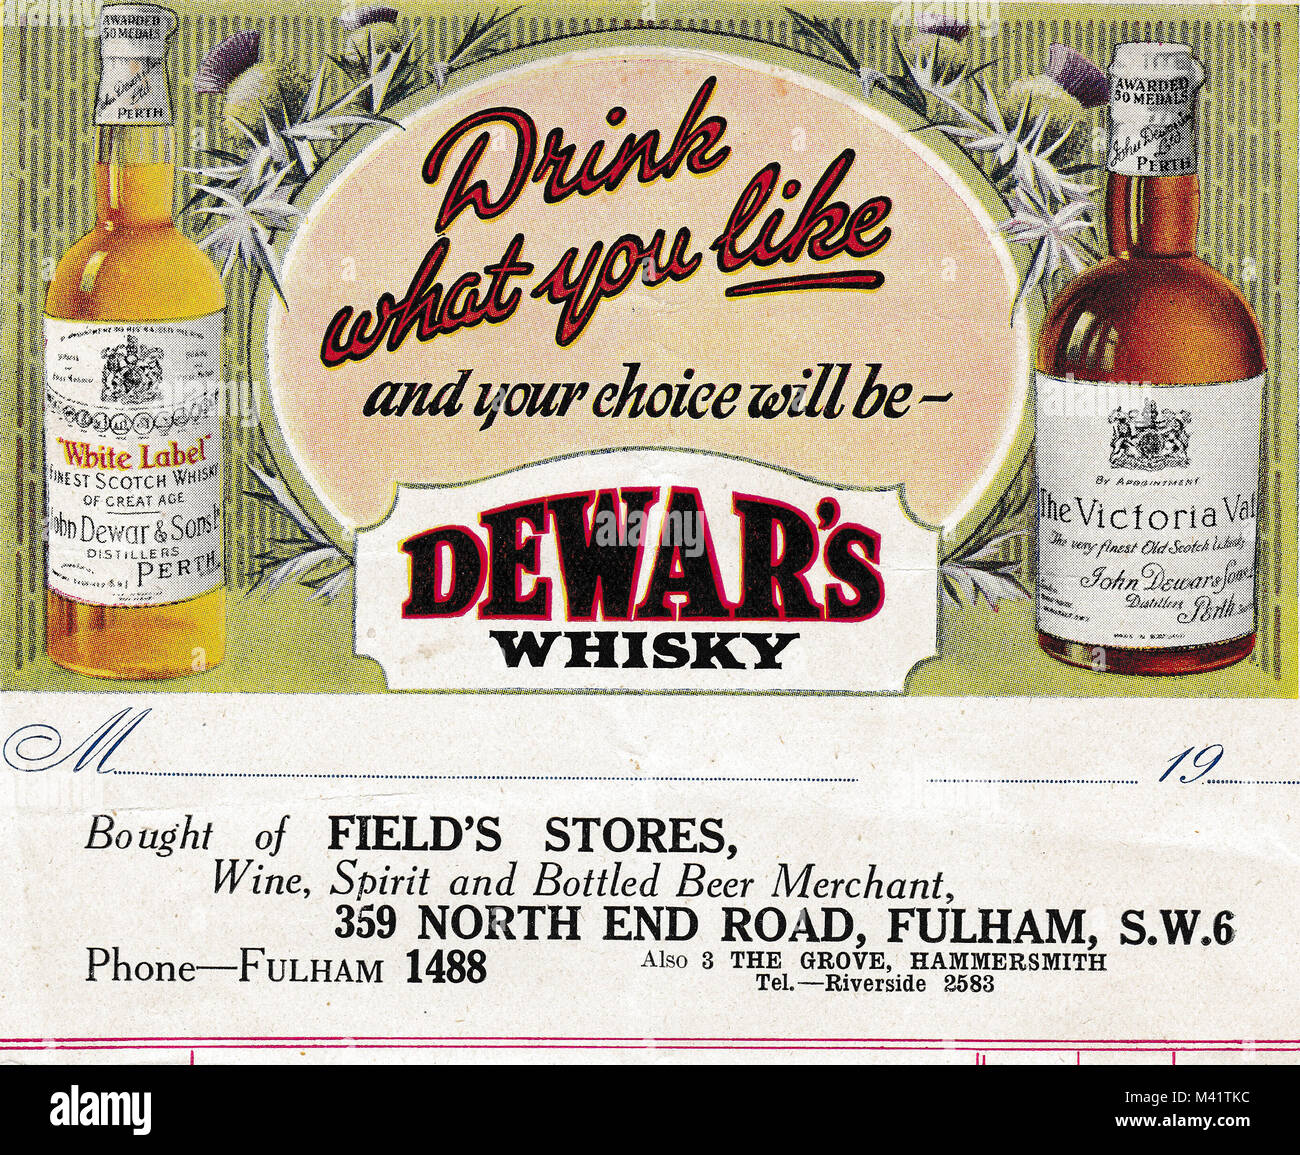 Dewars whisky advert Stock Photo